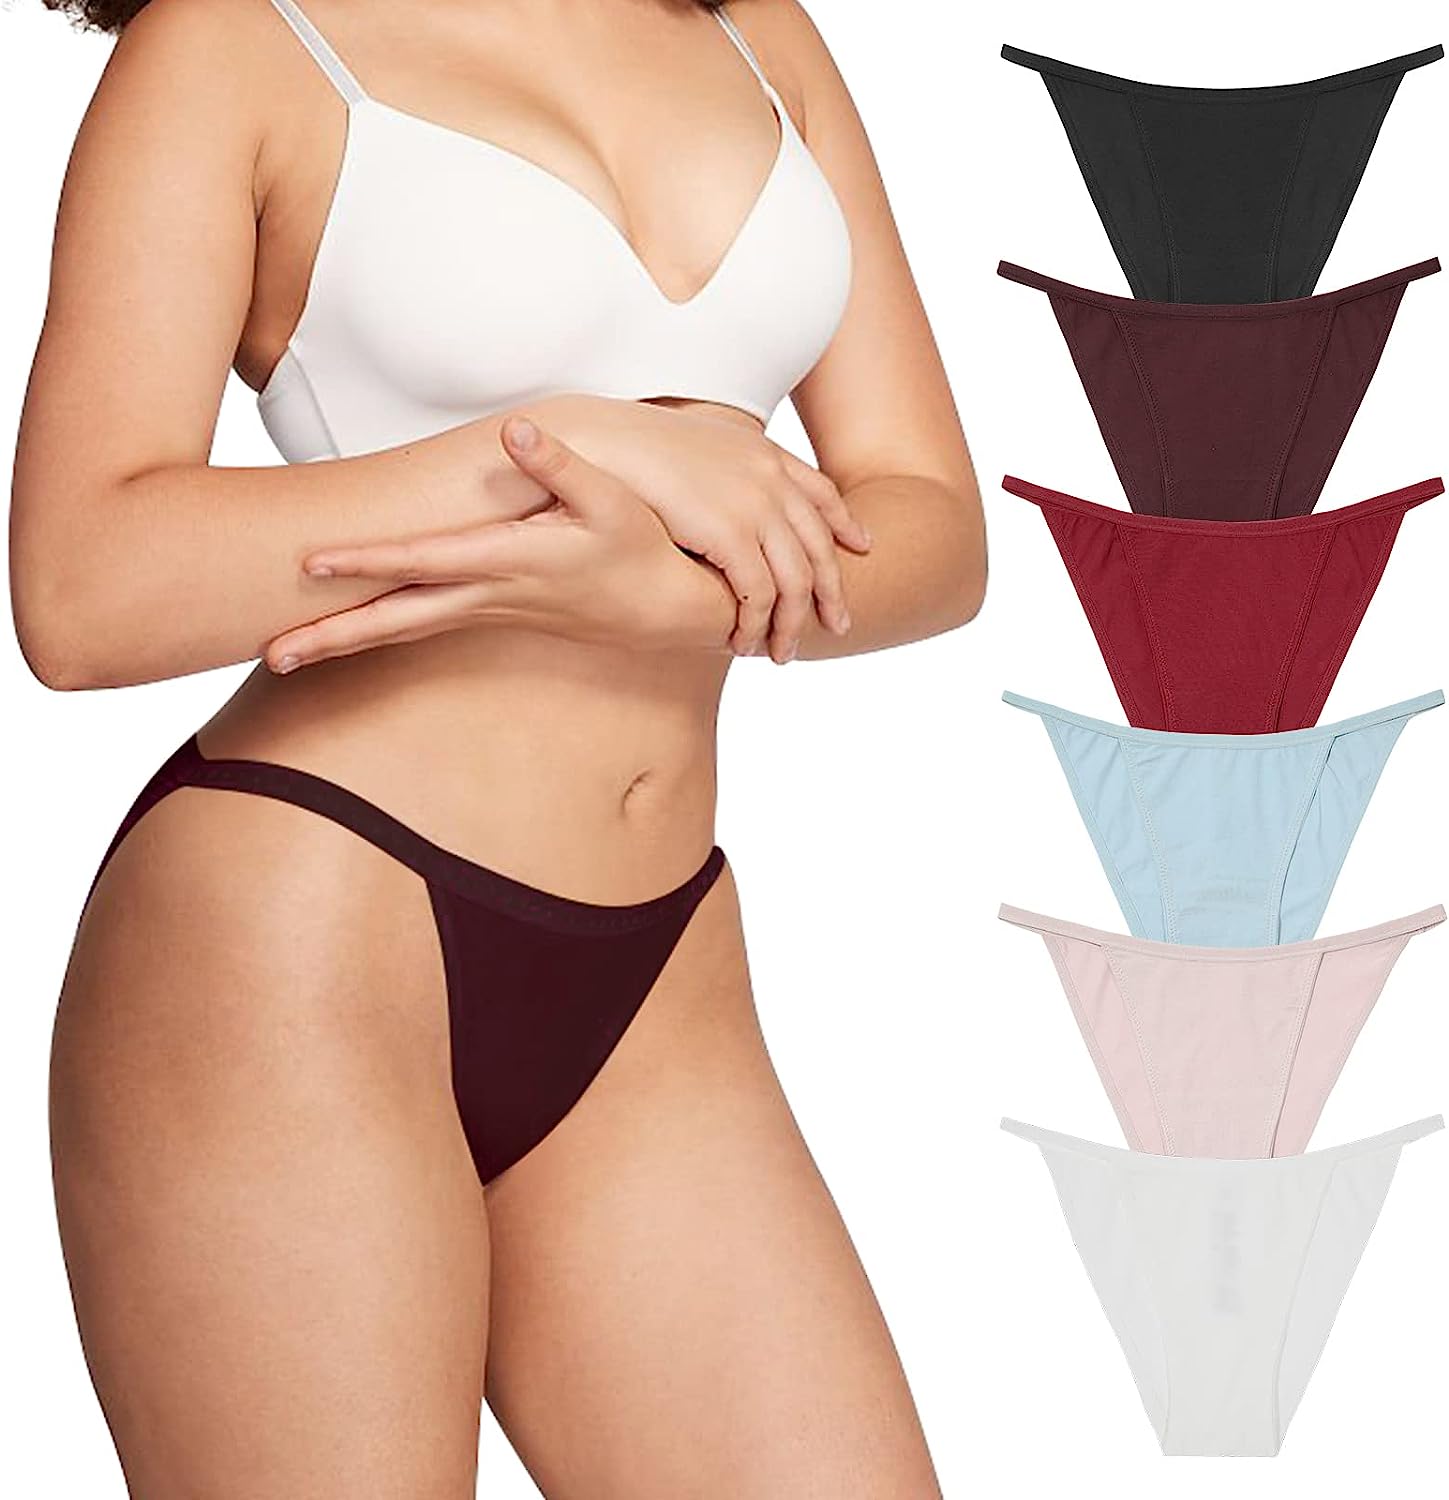 LEVAO Women's Bikini Panties Cotton Underwear, Plus Size High Cut